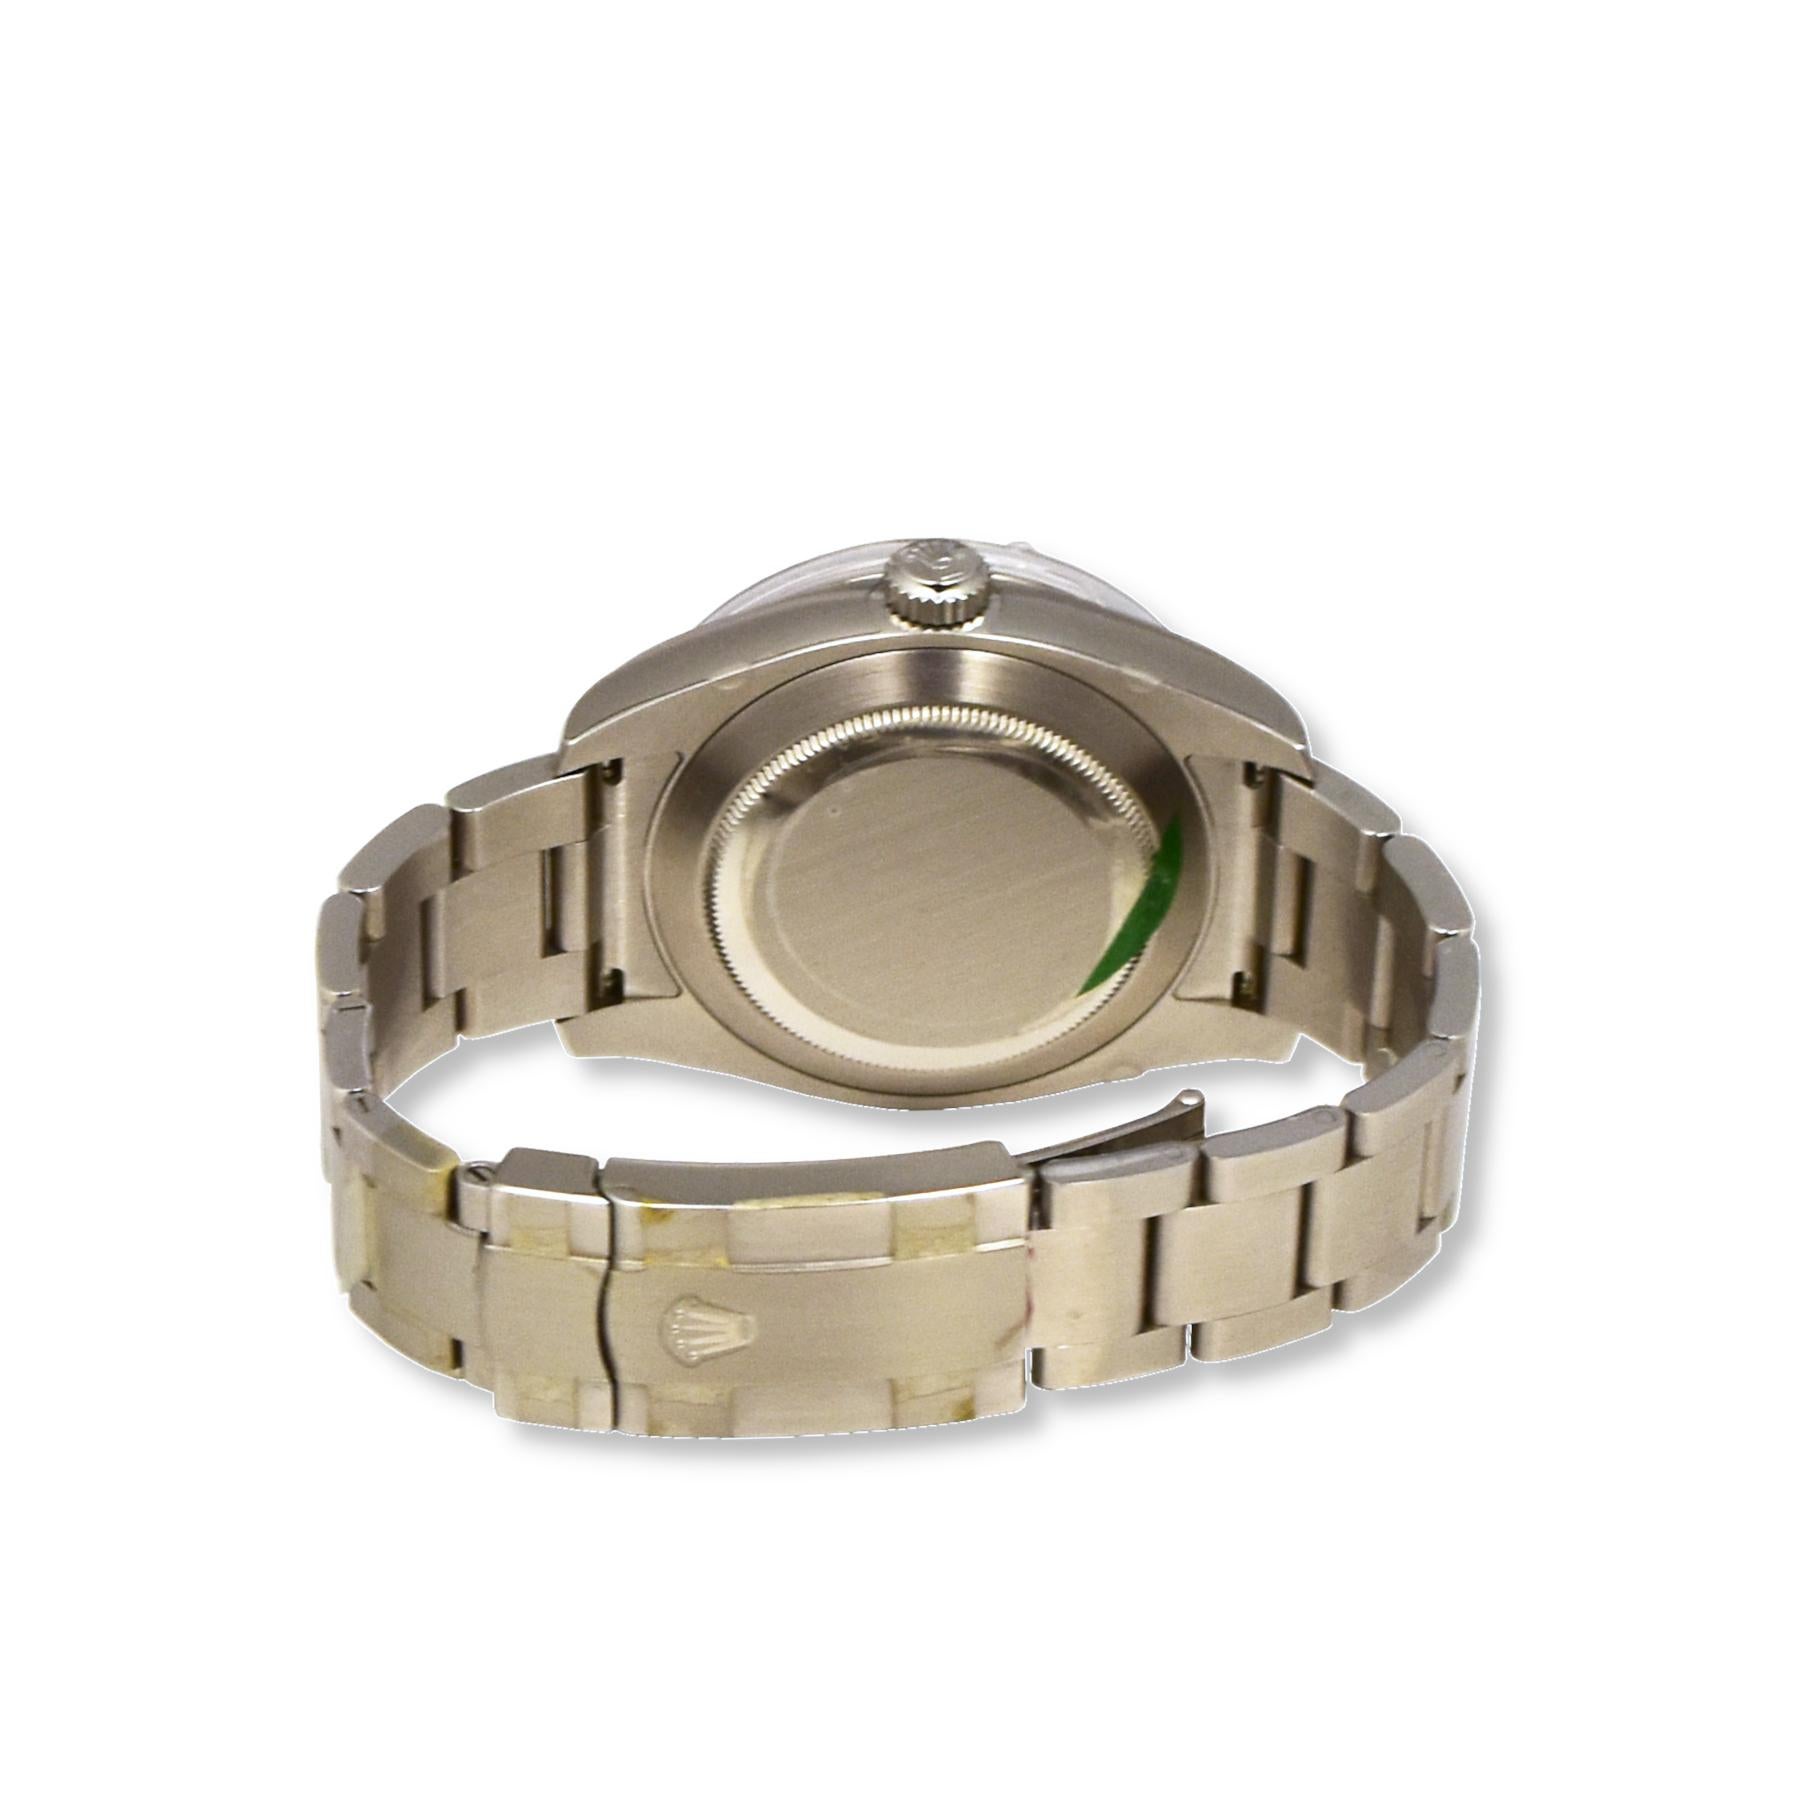 Women's or Men's Rolex Airking Ref. 116900 in Black Dial Stainless Steel Watch